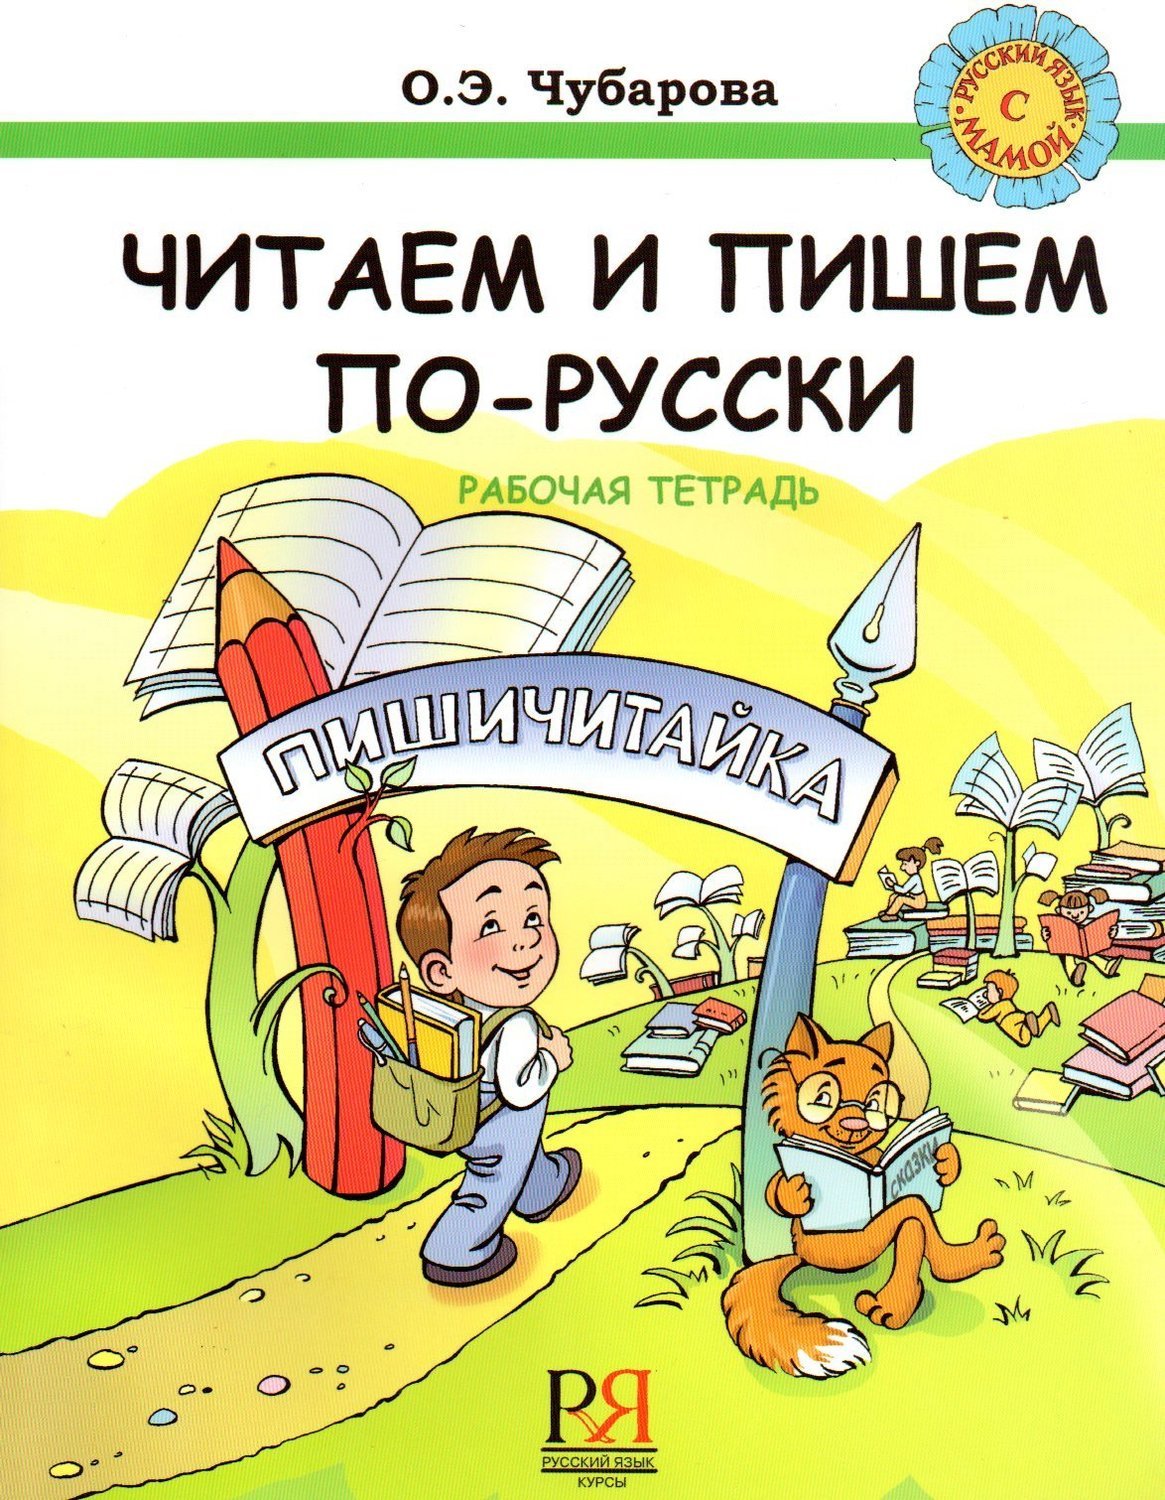 Chubarova, Olga. We read and write Russian. Workbook. Learn Russian with Mom Series ISBN 9785883371225